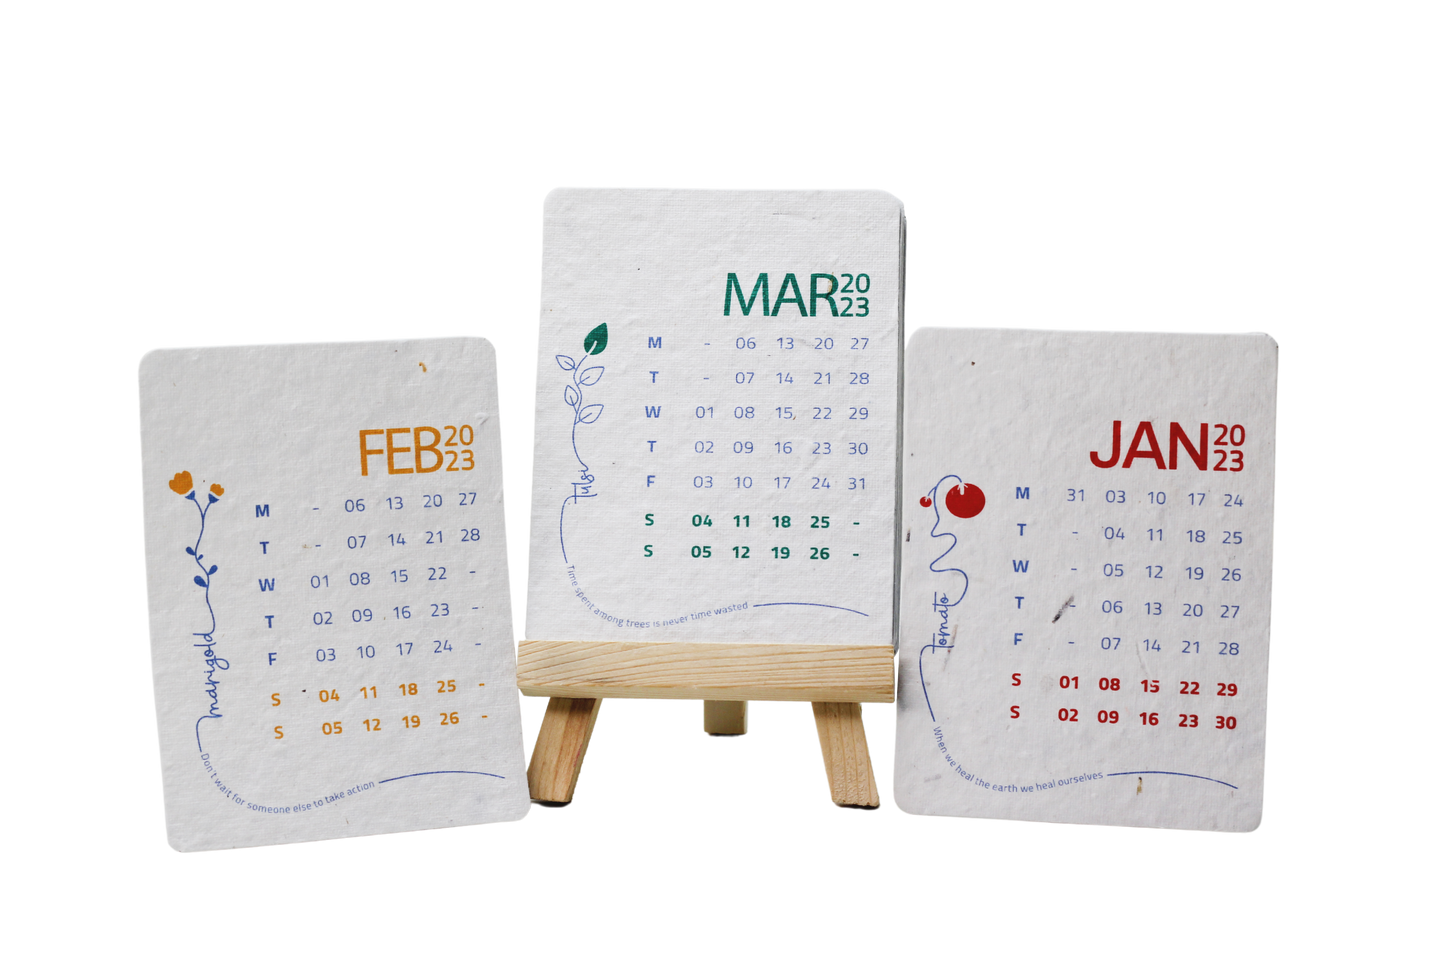 Seed Paper Plantable Calendars | BG61